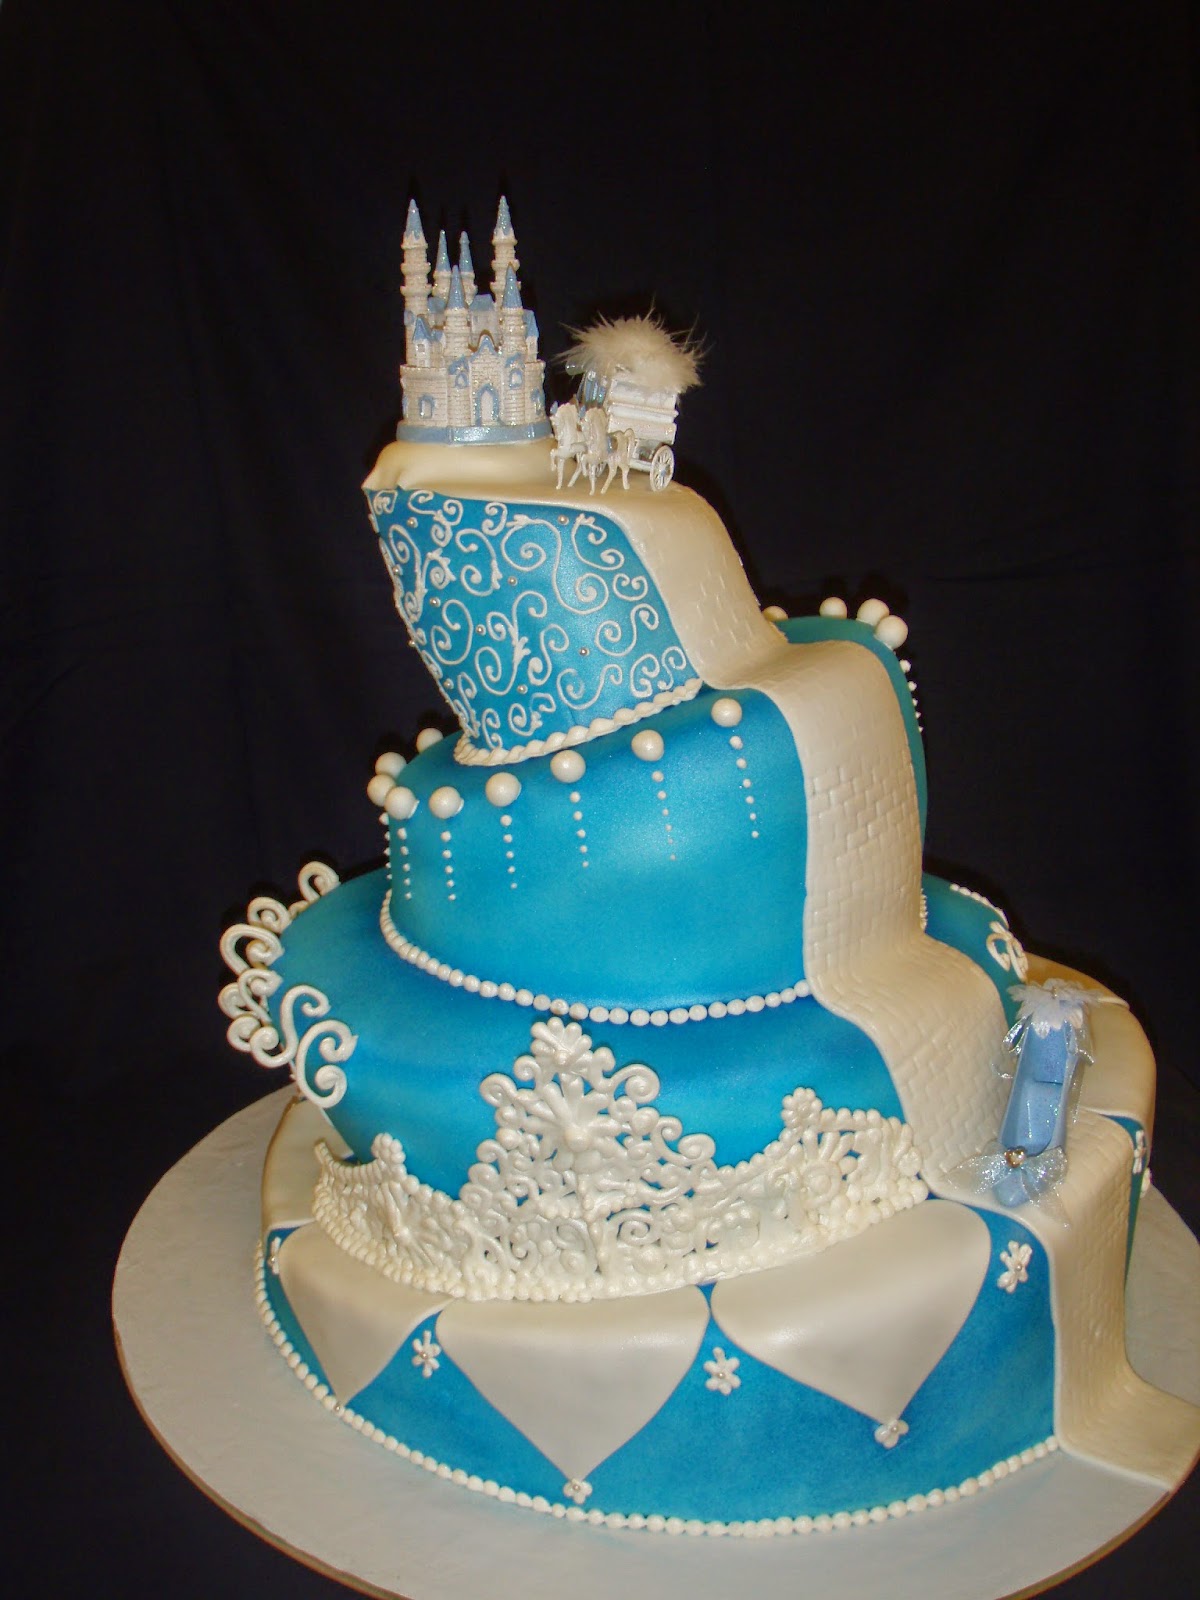 Let them eat cake: unique wedding cakes | Alice In ...